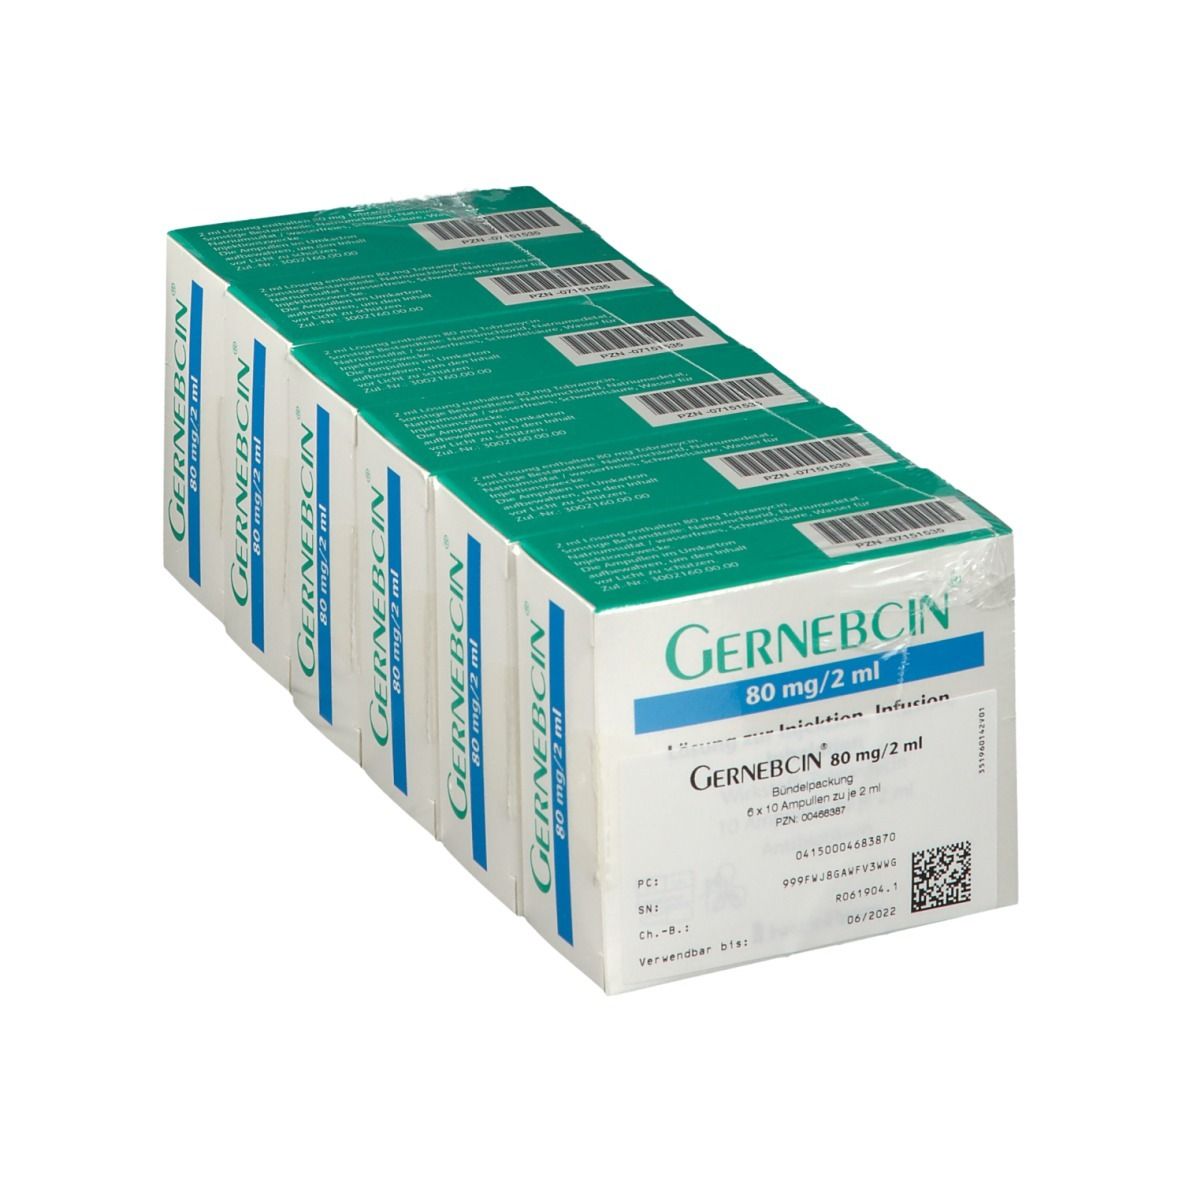 Gernebcin® 80 mg/2 ml